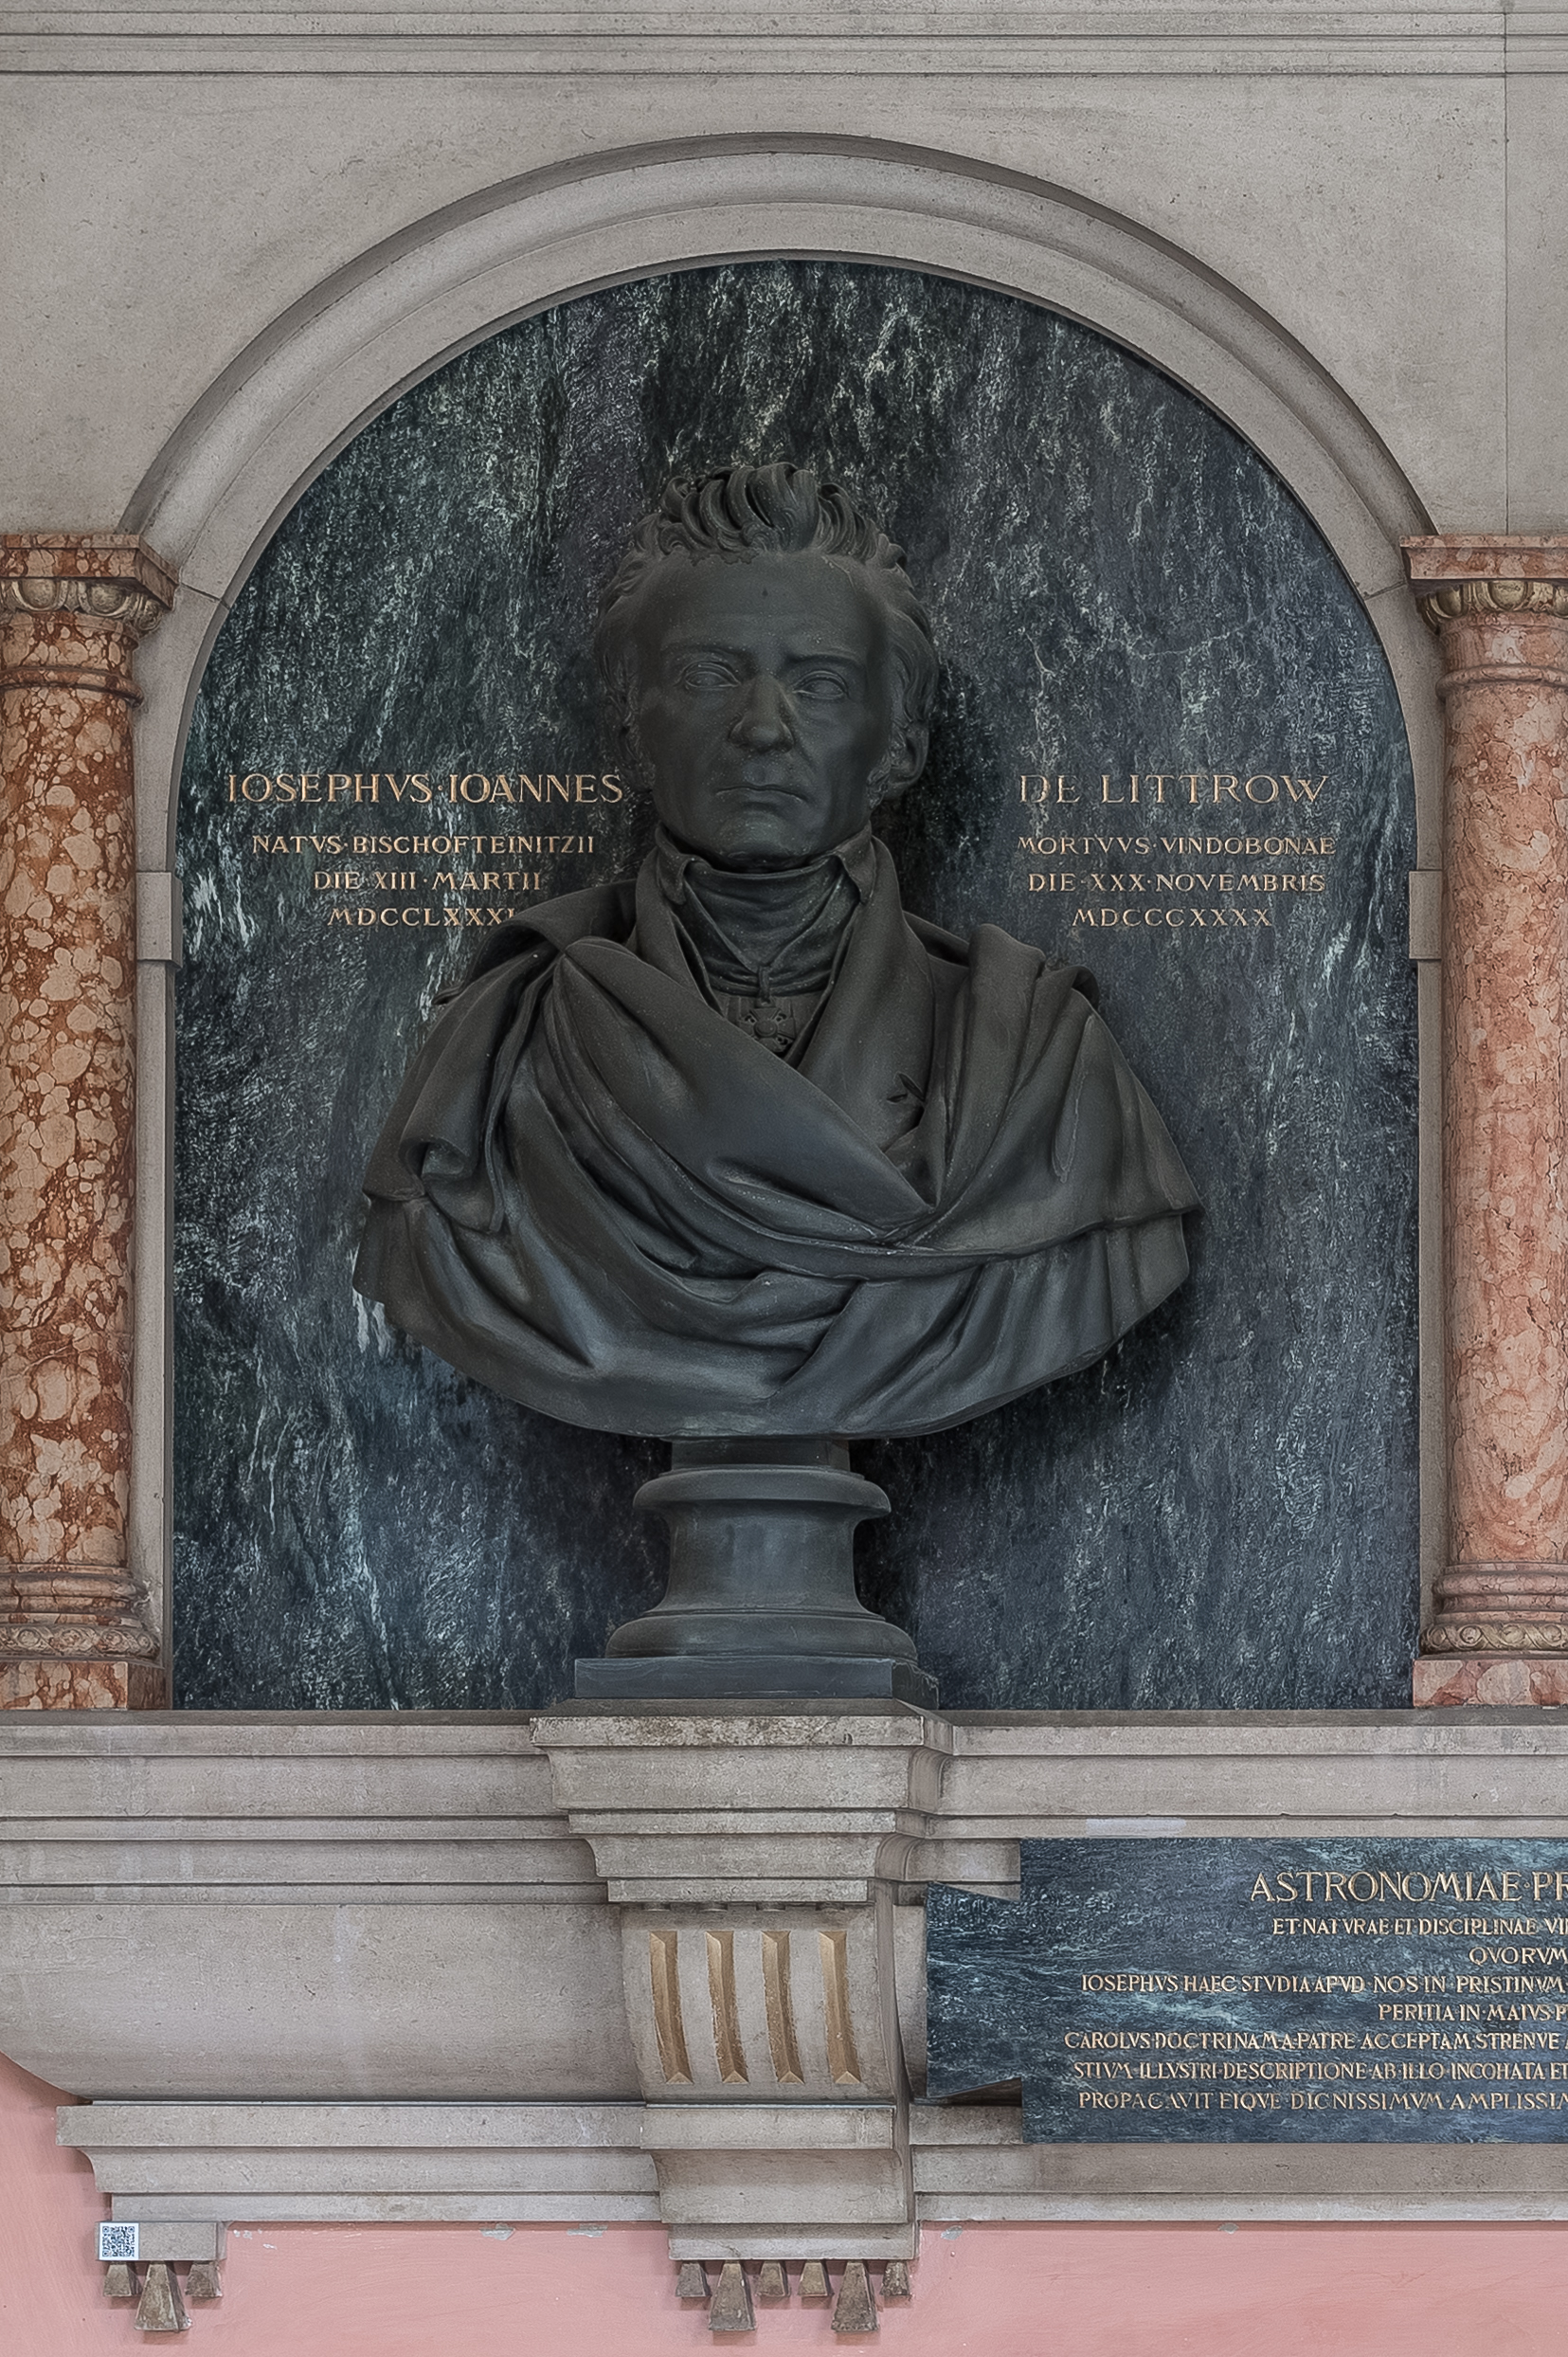 Karl von Littrow (1811-1877), Nr 96 bust (bronce) in the Arkadenhof of the University of Vienna-2379a-HDR